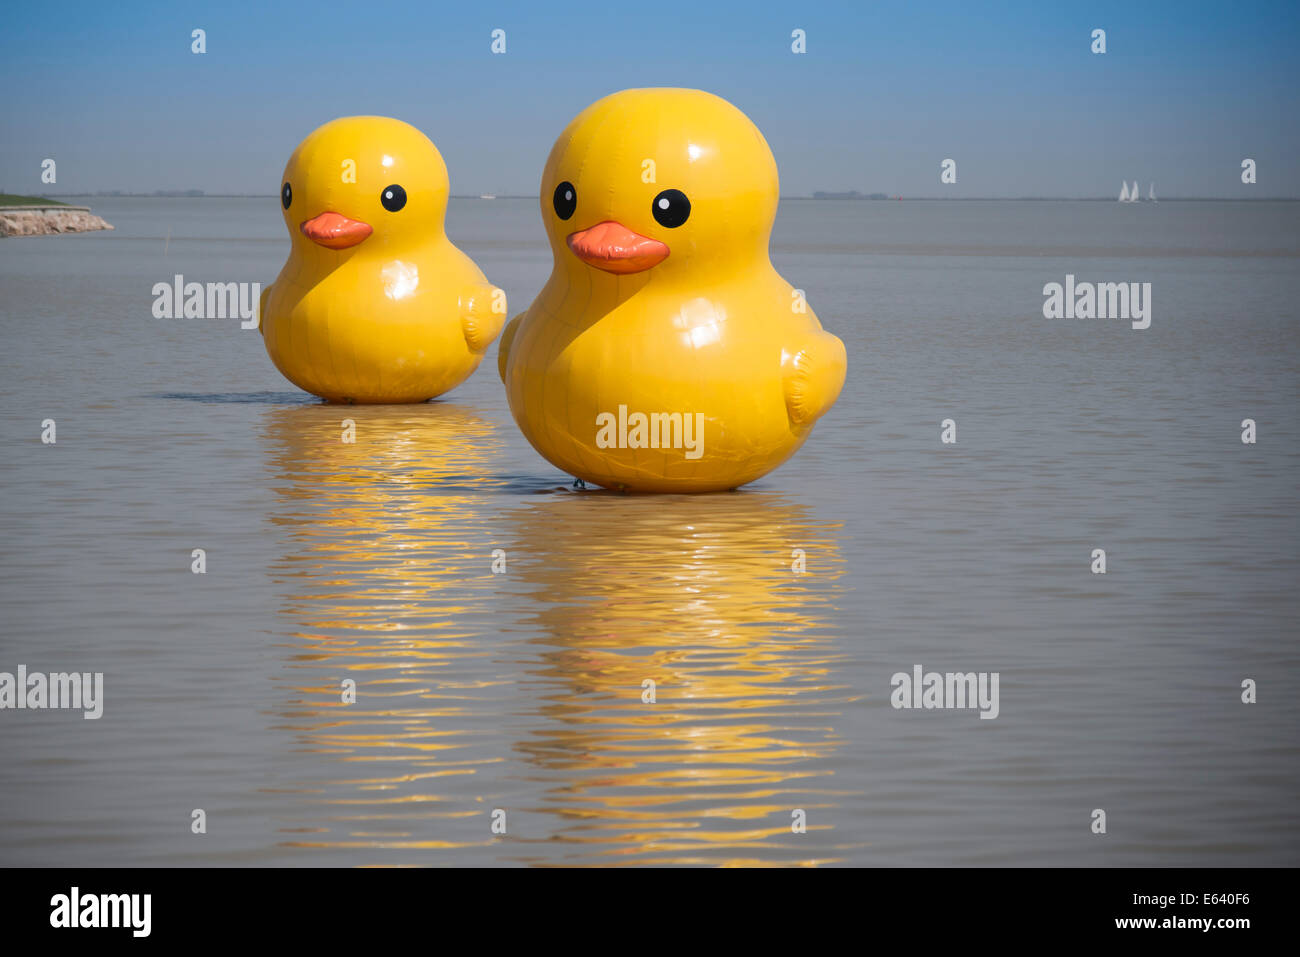 Rubber ducks on Lake Tai, Huzhou, Zhejiang, China Stock Photo